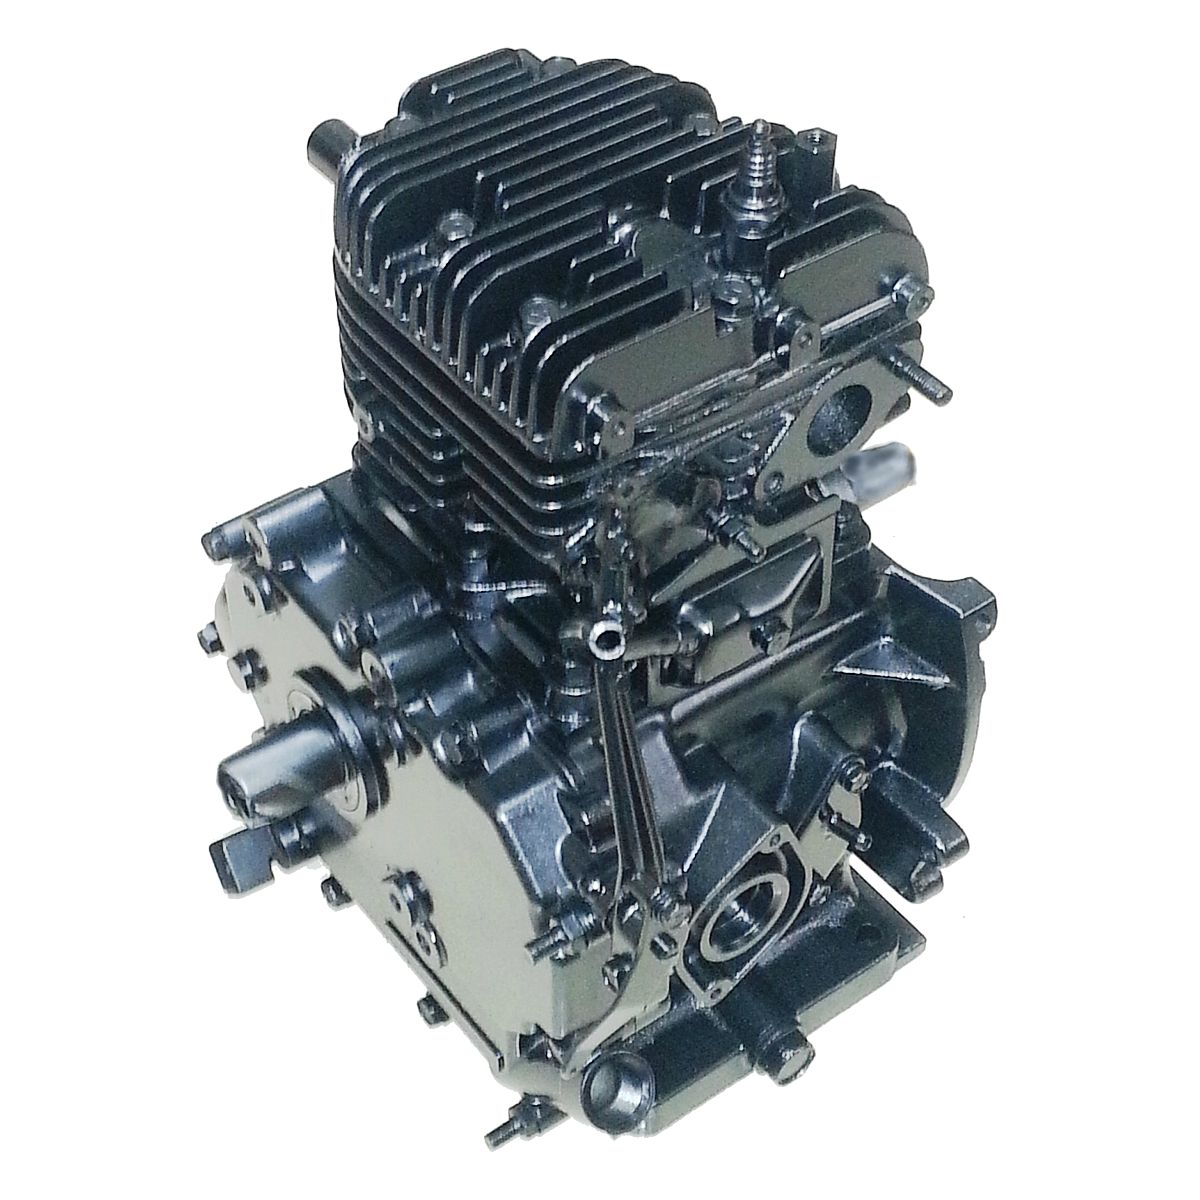 Club Car KF82 KZ340 Golf Cart Engine Exchange Motor Kawasaki 341cc -  Precision Engineering STL